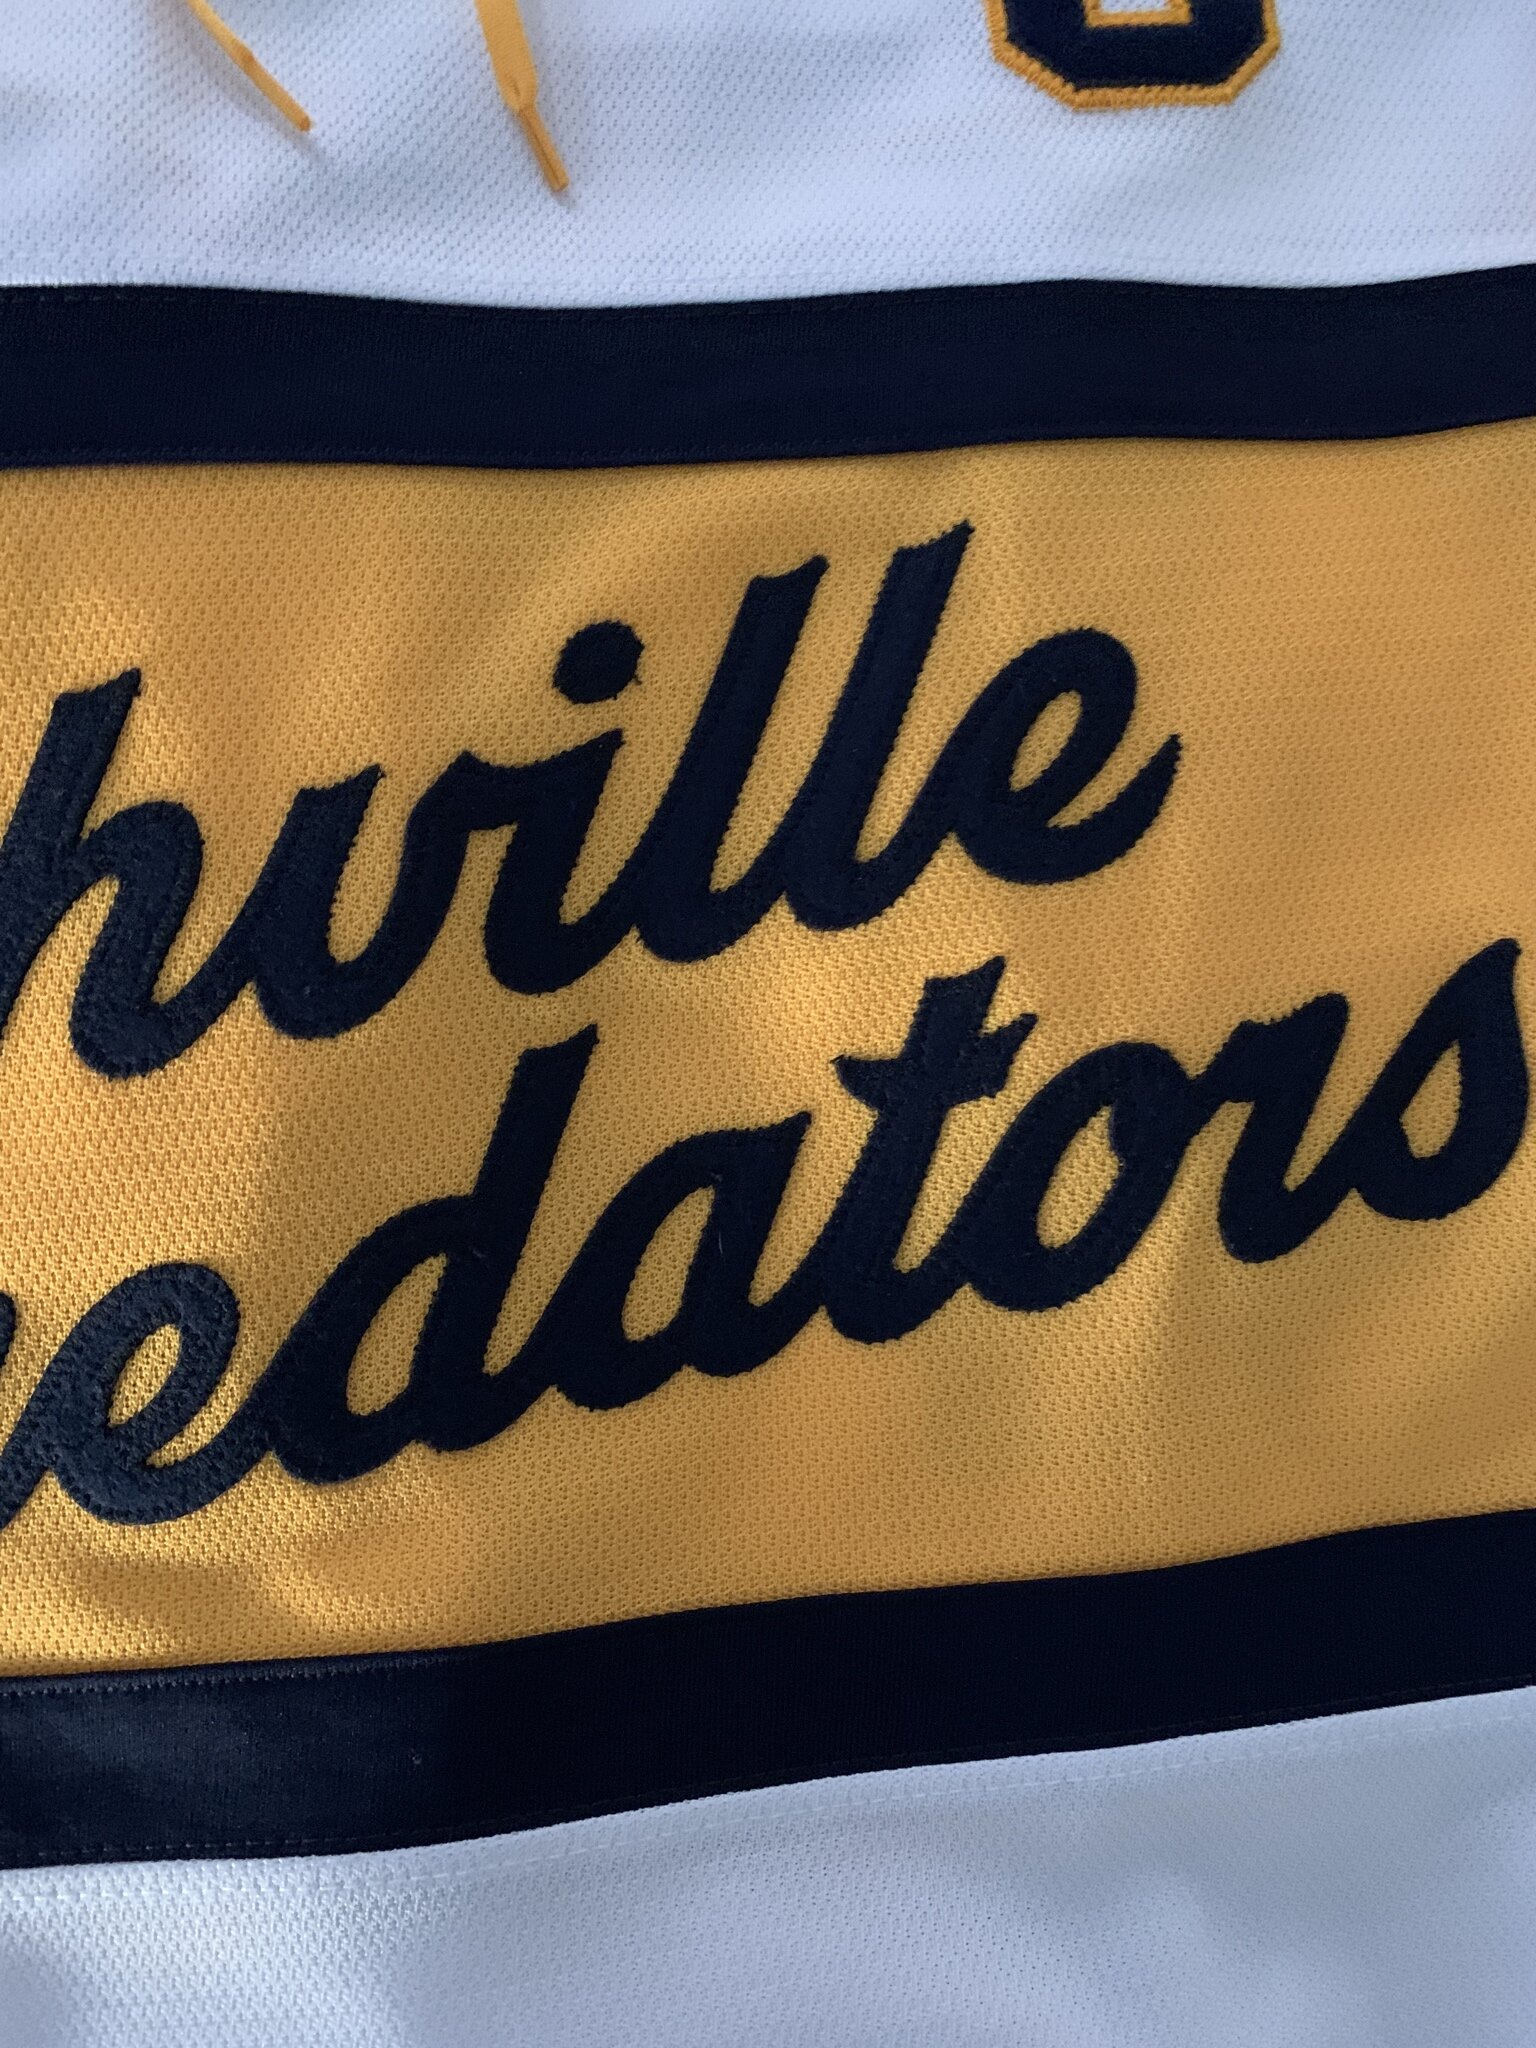 Nashville Predators Winter Classic Jerseys: Made in Canada (on-ice